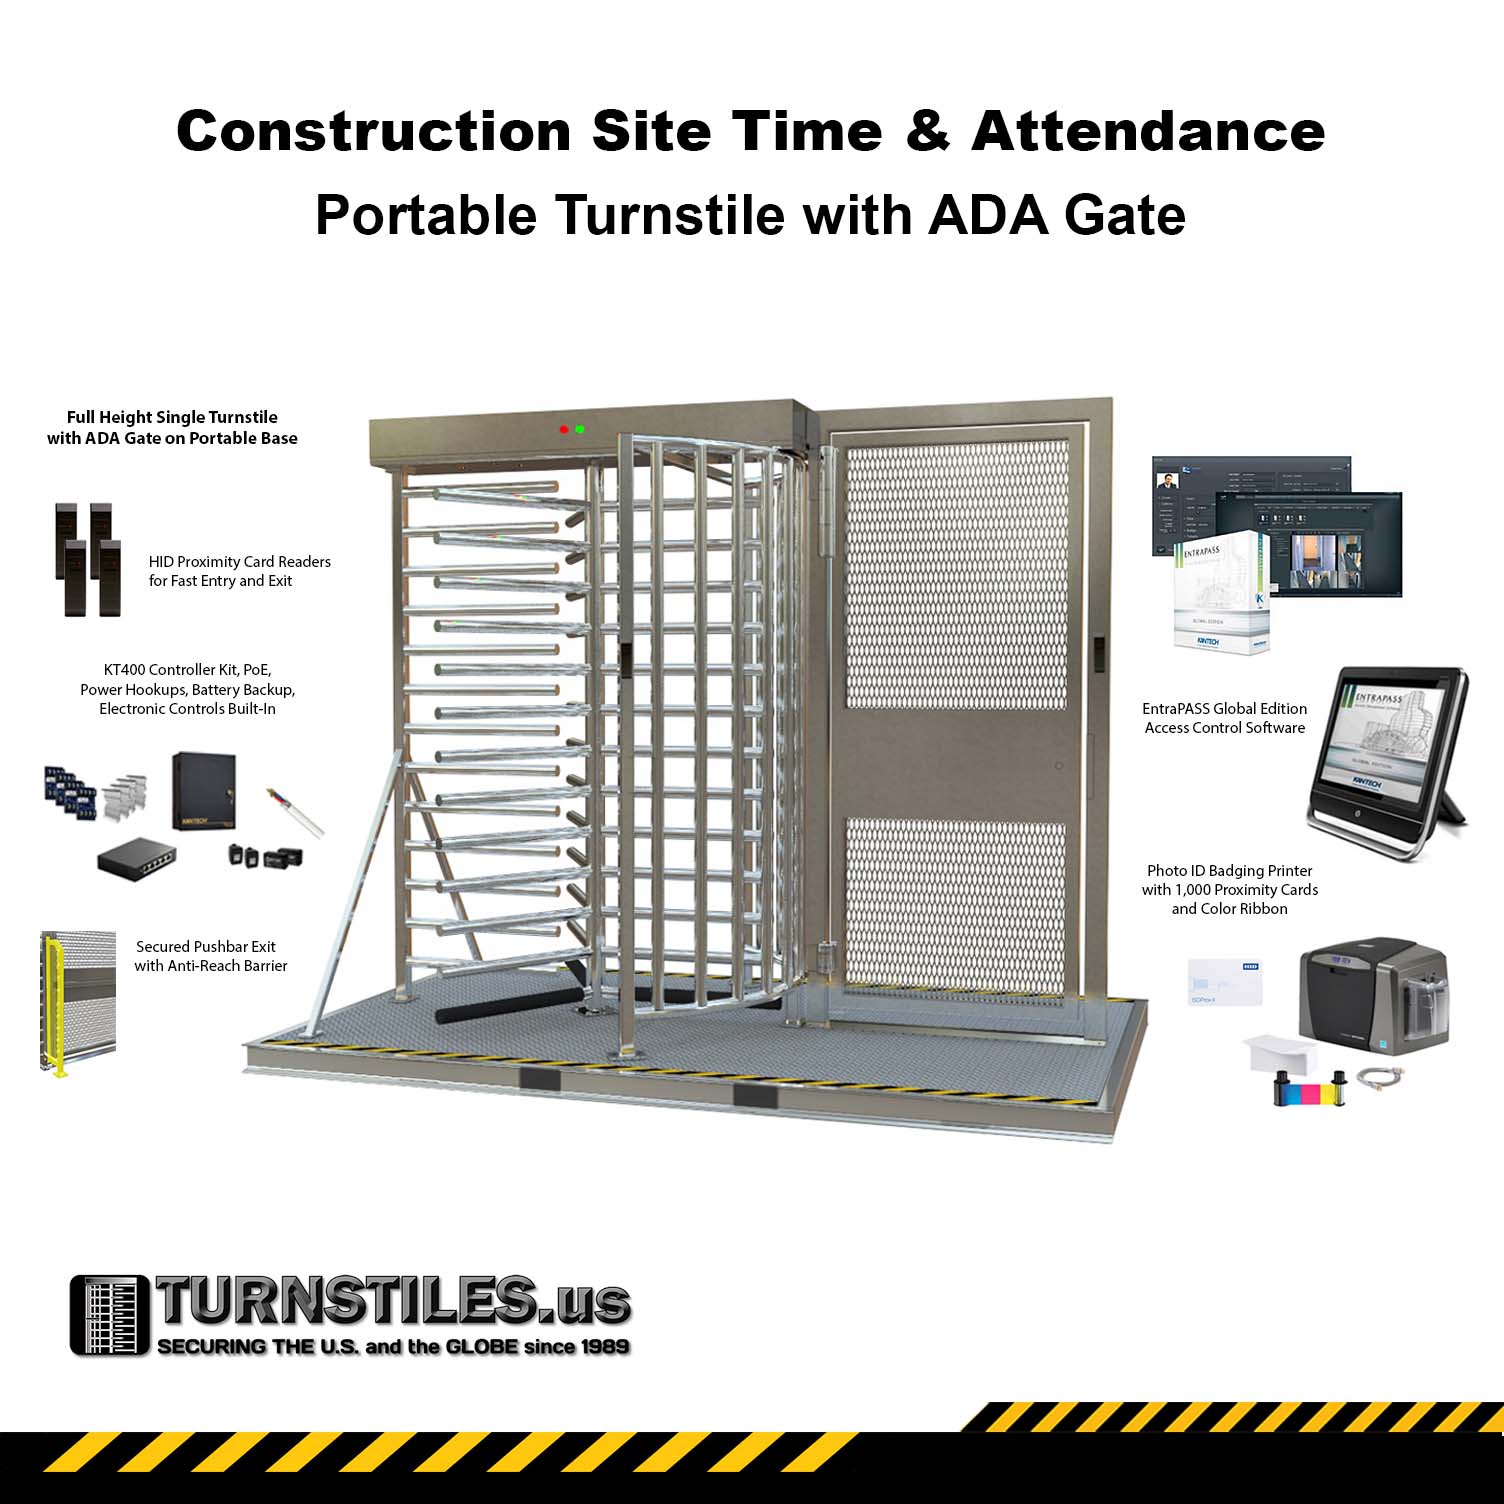 https://www.turnstiles.us/wp-content/uploads/2020/11/Construction-Site-Time-Attendance-Package-wwwTURNSTILESus-feat.jpg